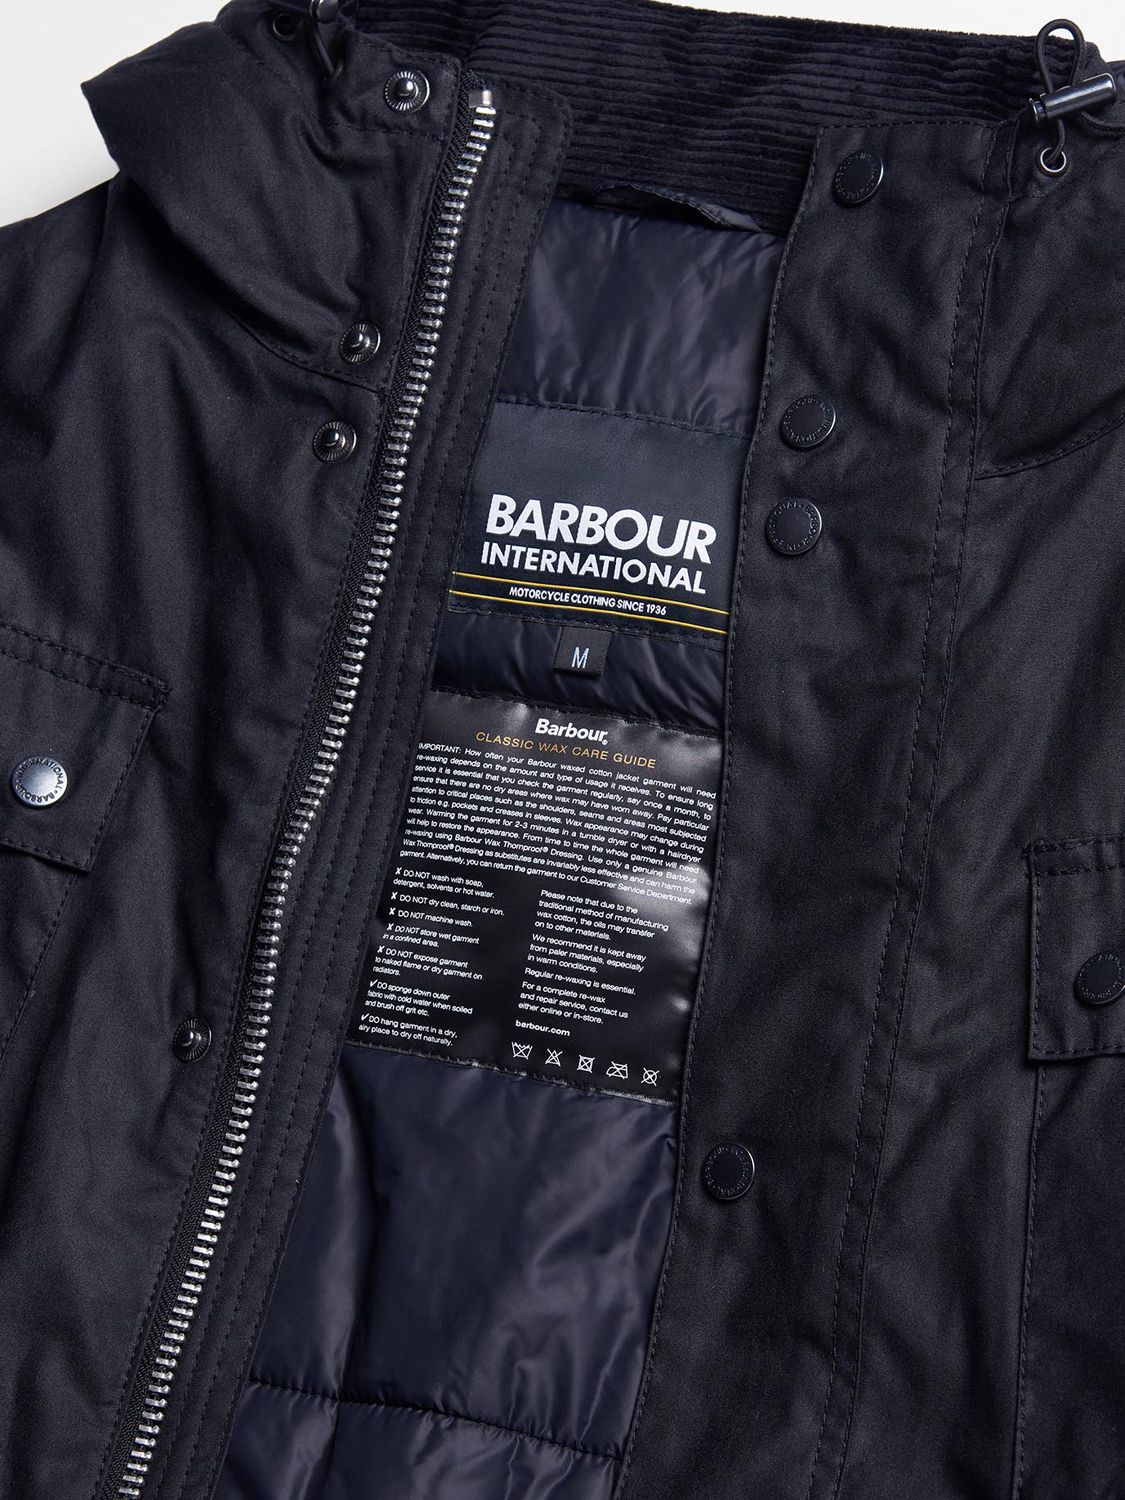 Barbour International Galloway Wax Jacket, Black, L